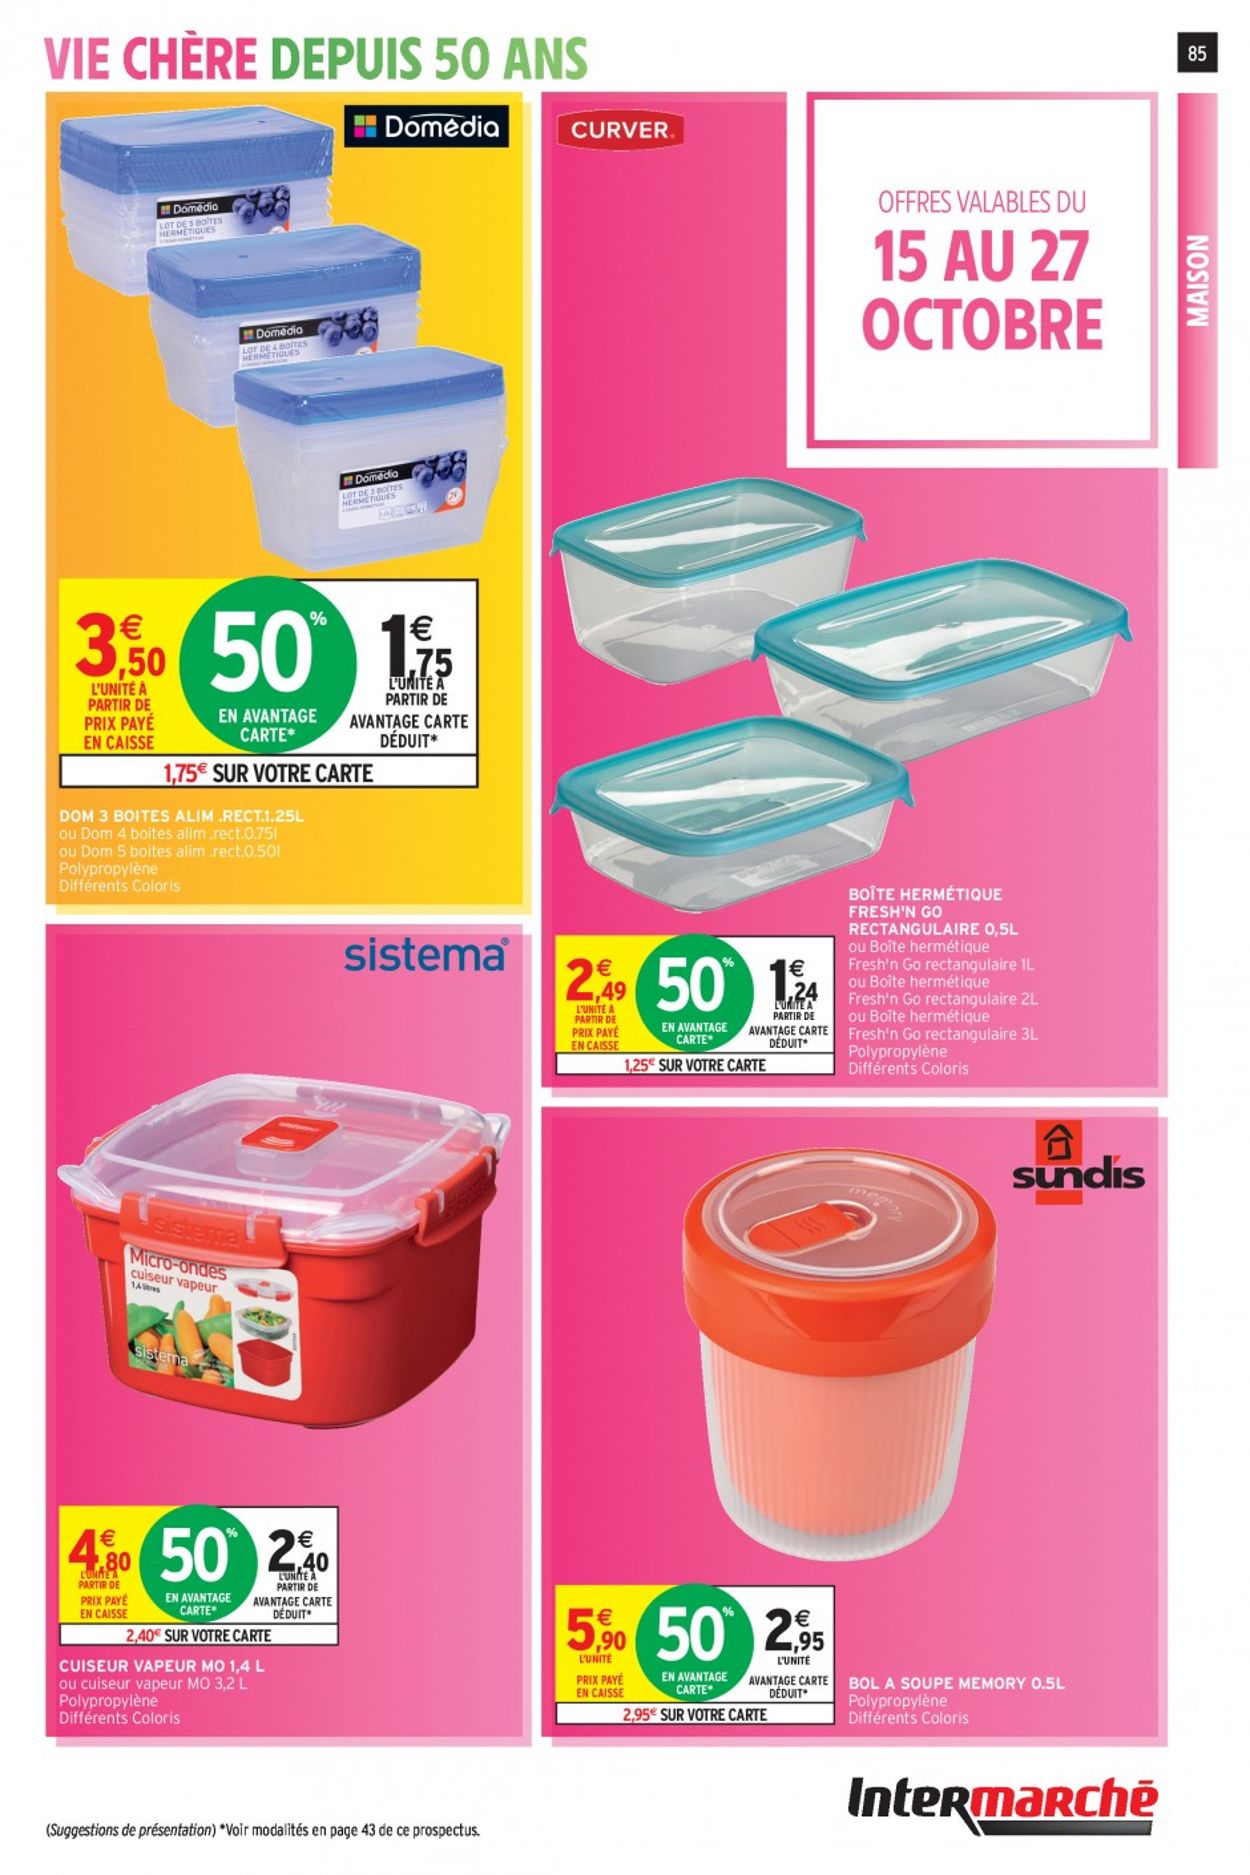 Intermarché Catalogue - 15.10-20.10.2019 (Page 81)